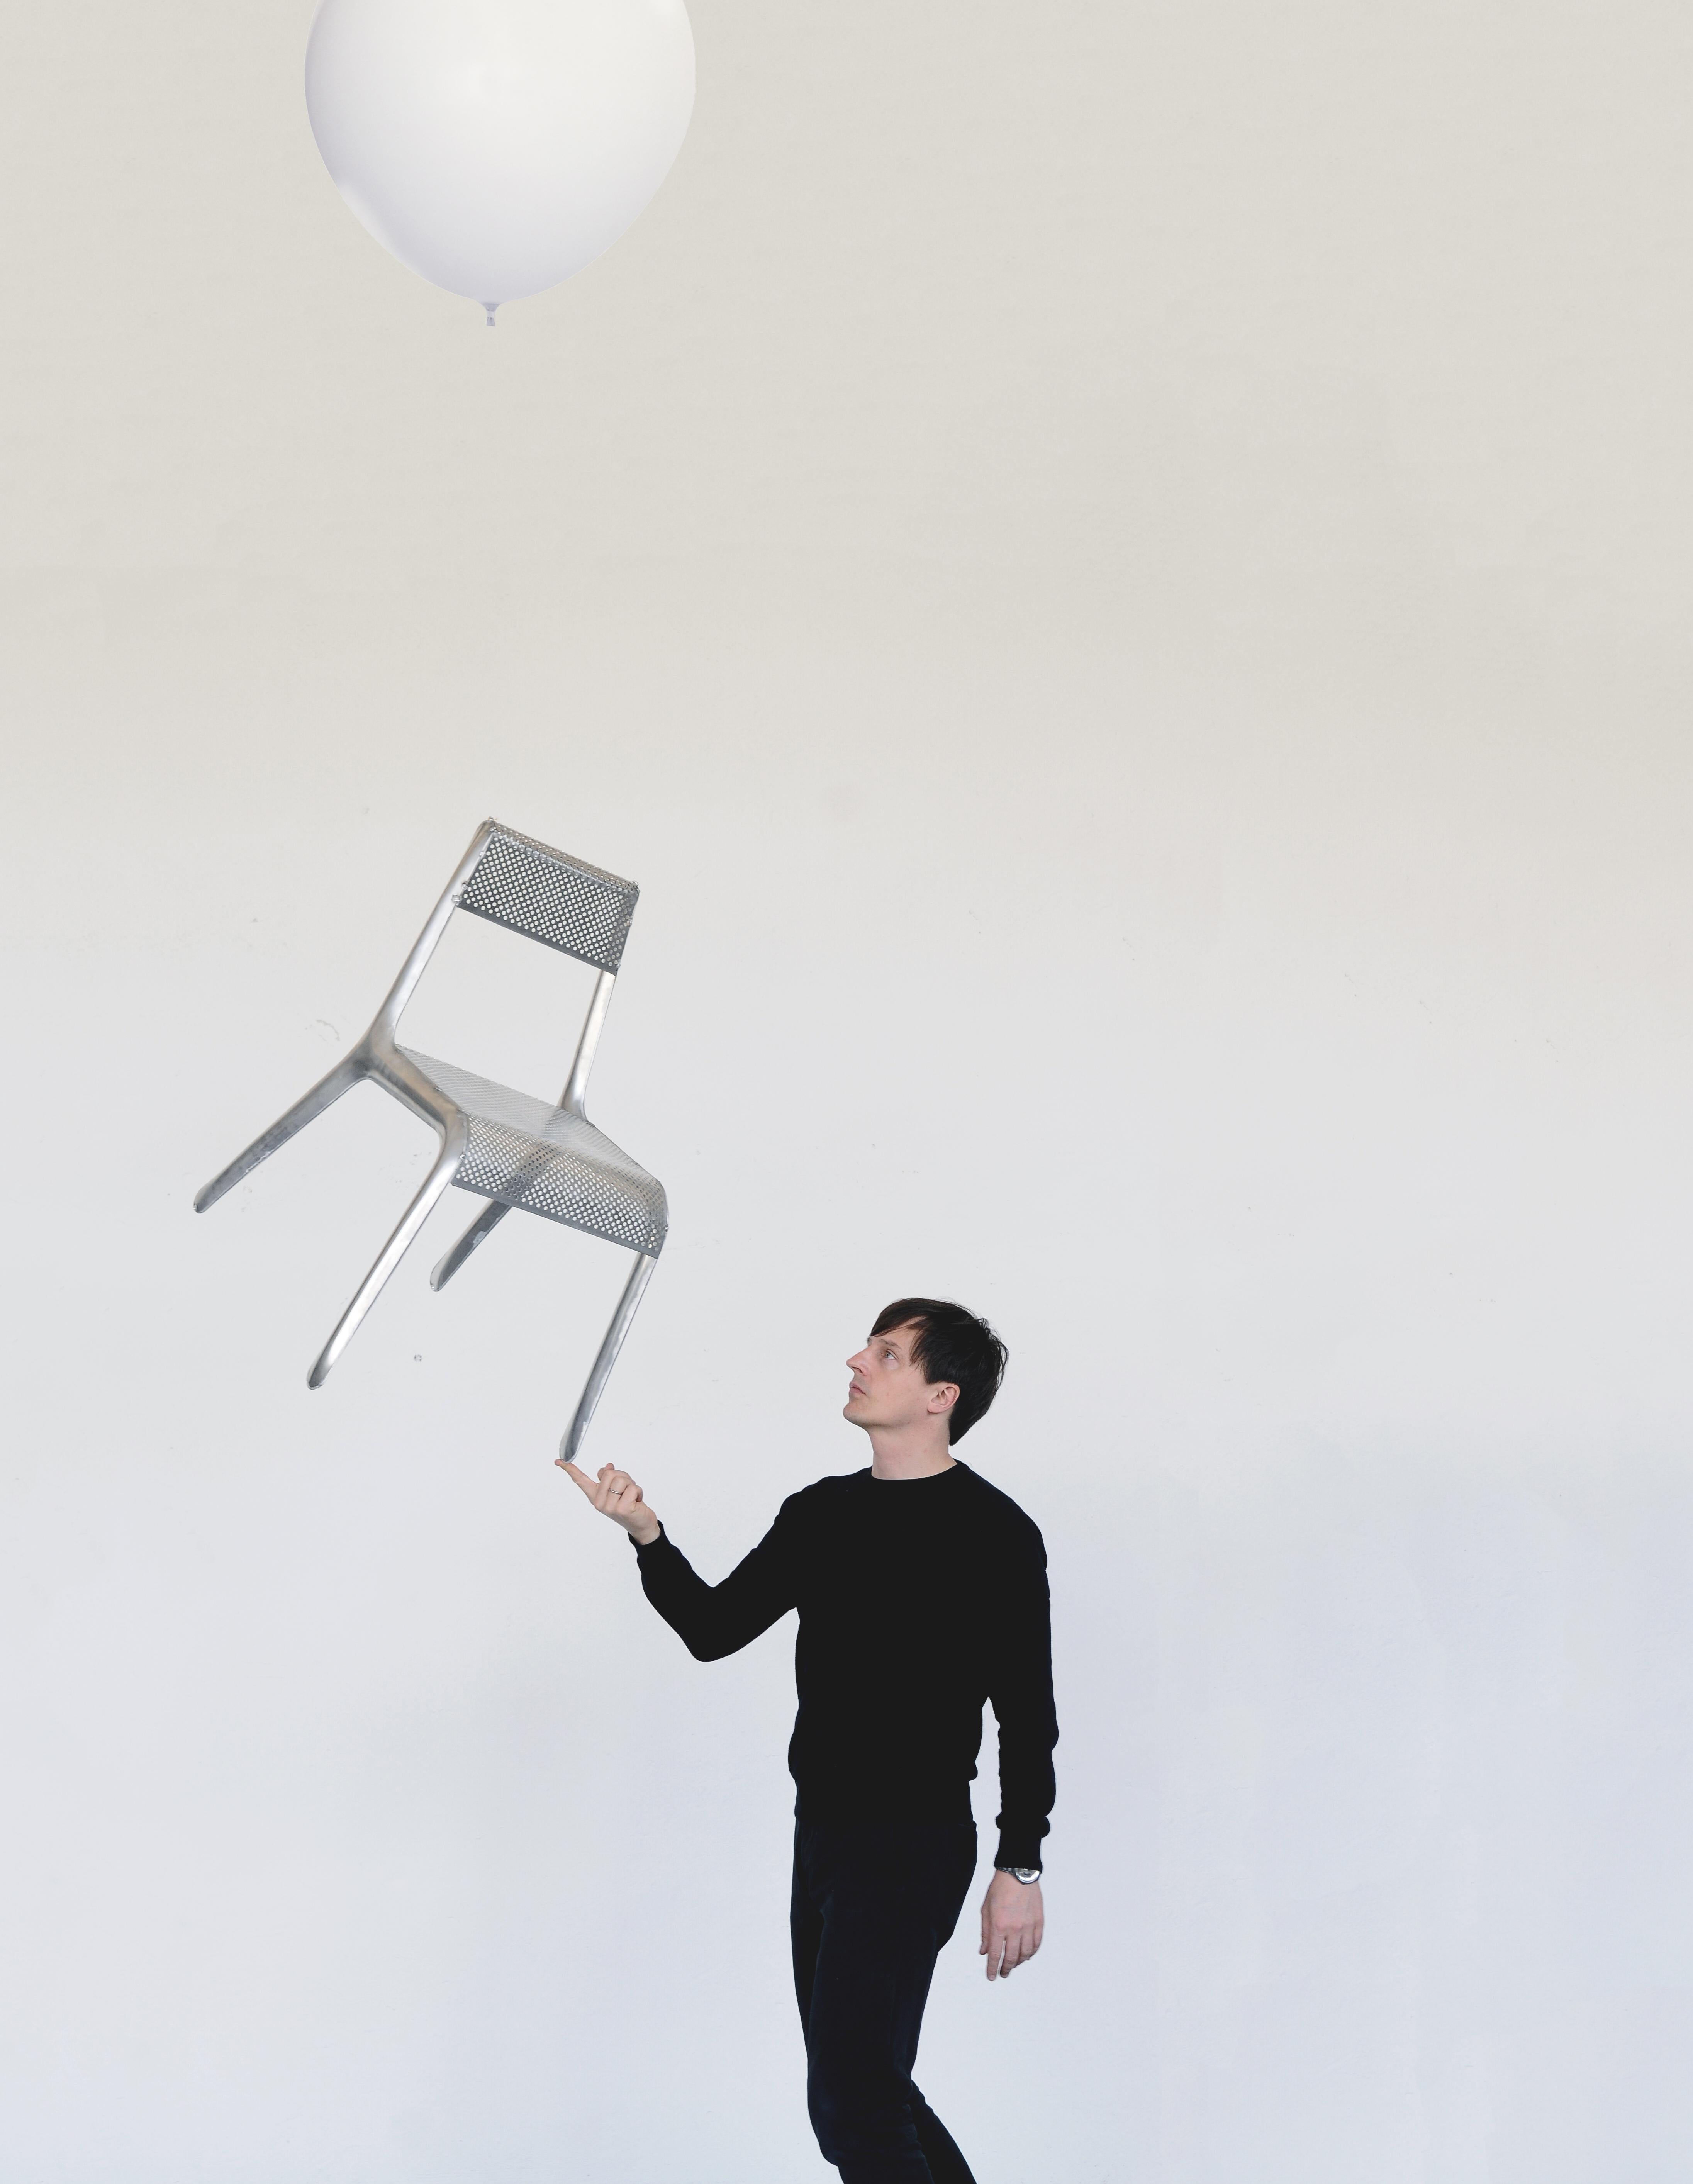 Ultraleggera chair by Zieta Prozessdesign
Aluminum
1600 grams
Measures: H 77cm, W 58cm, D 60cm

